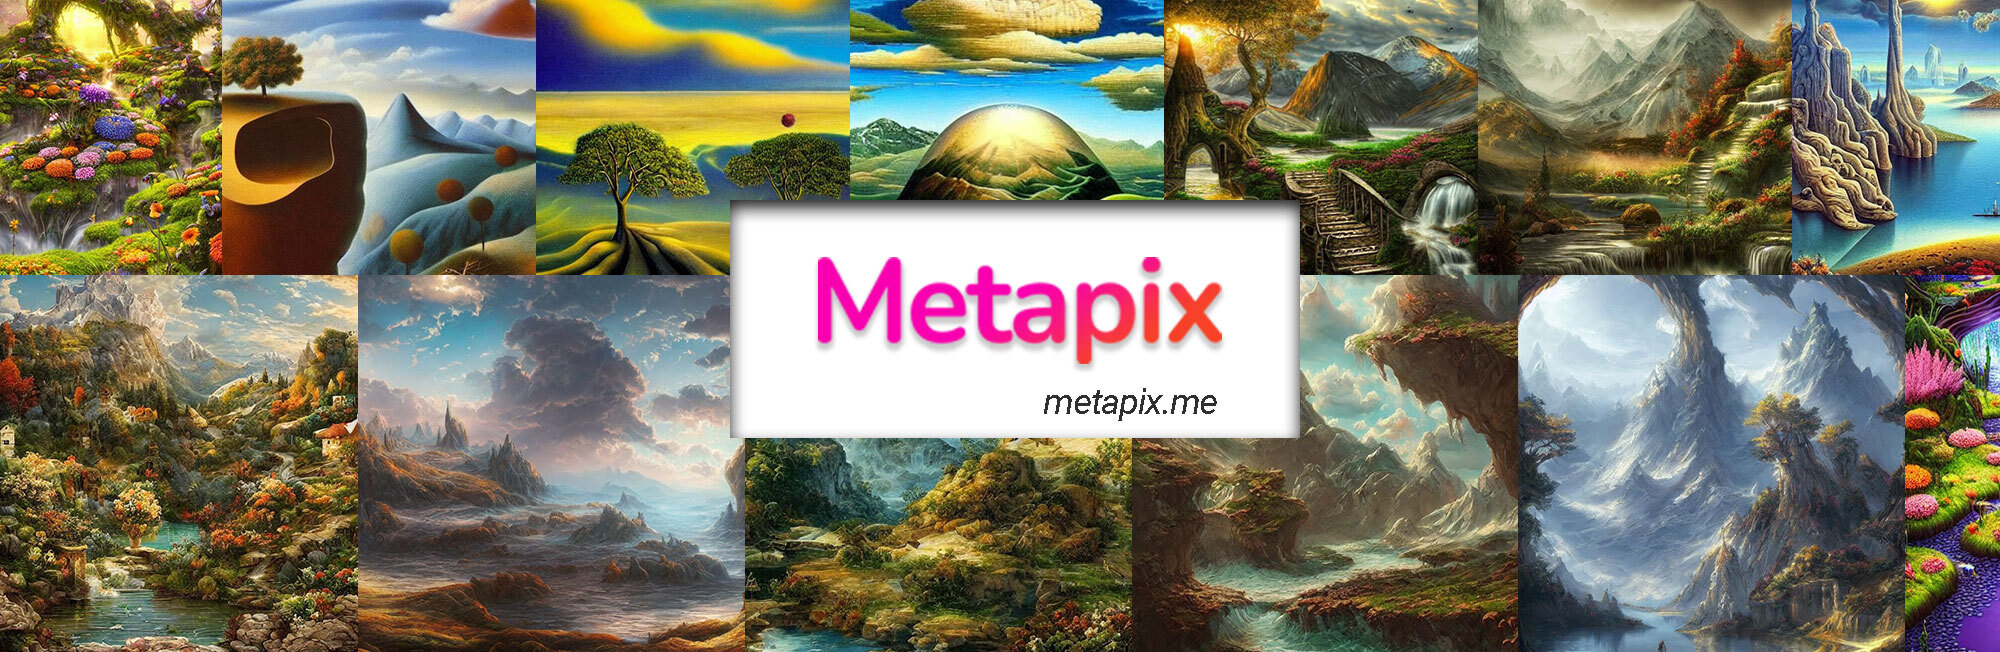 Metapix_ 横幅